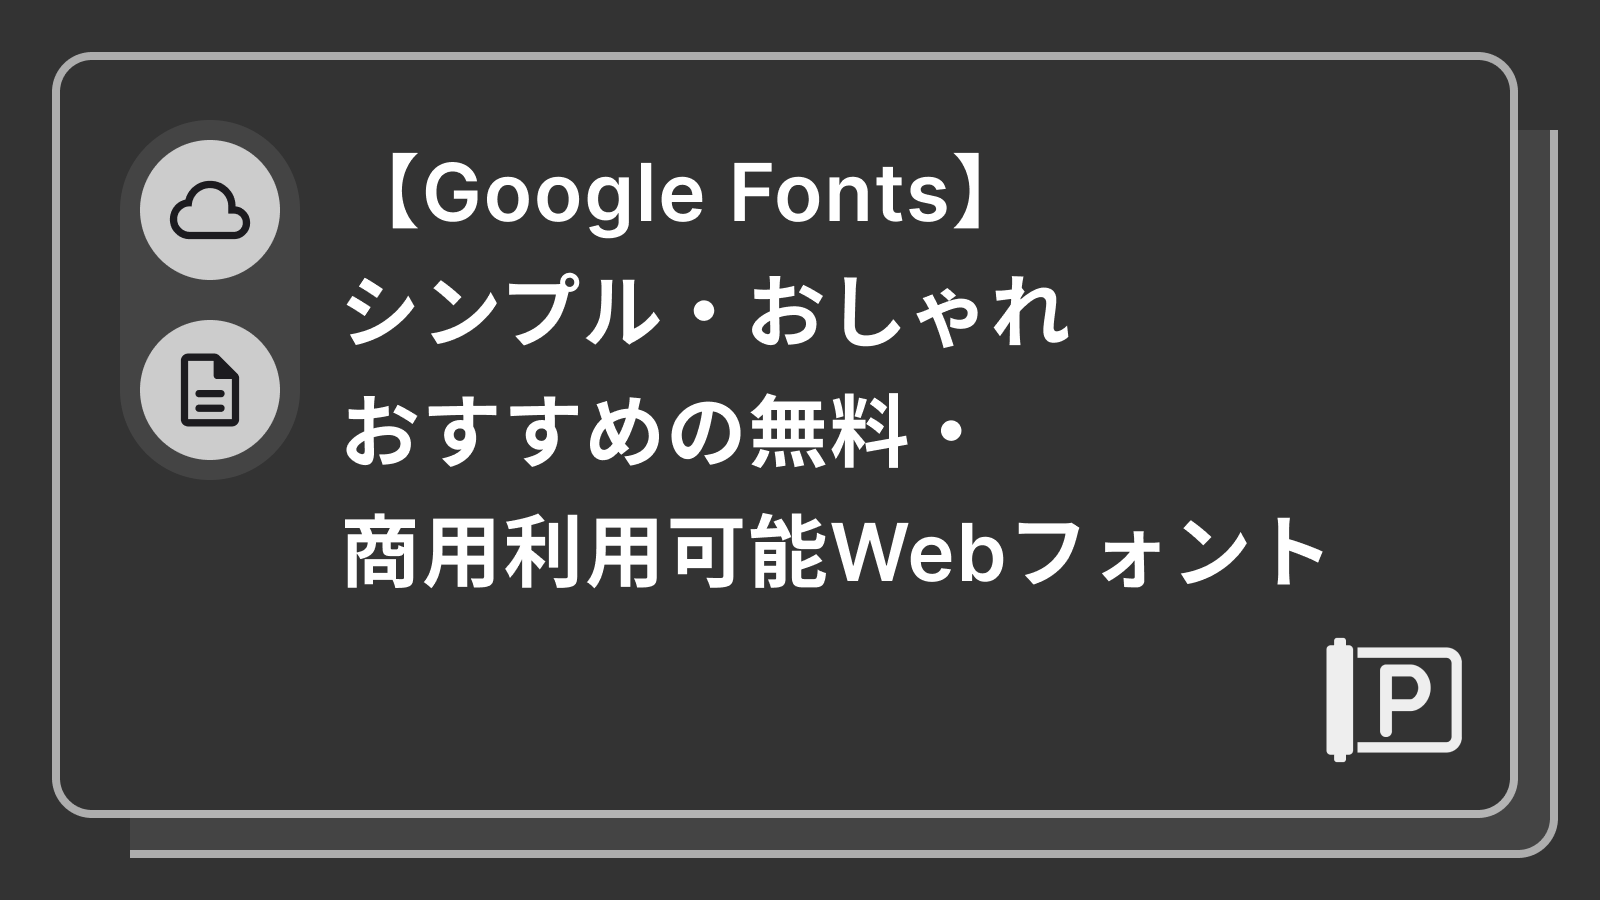 【Google Fonts】シンプル・おしゃれ おすすめの無料・商用利用可能Webフォント